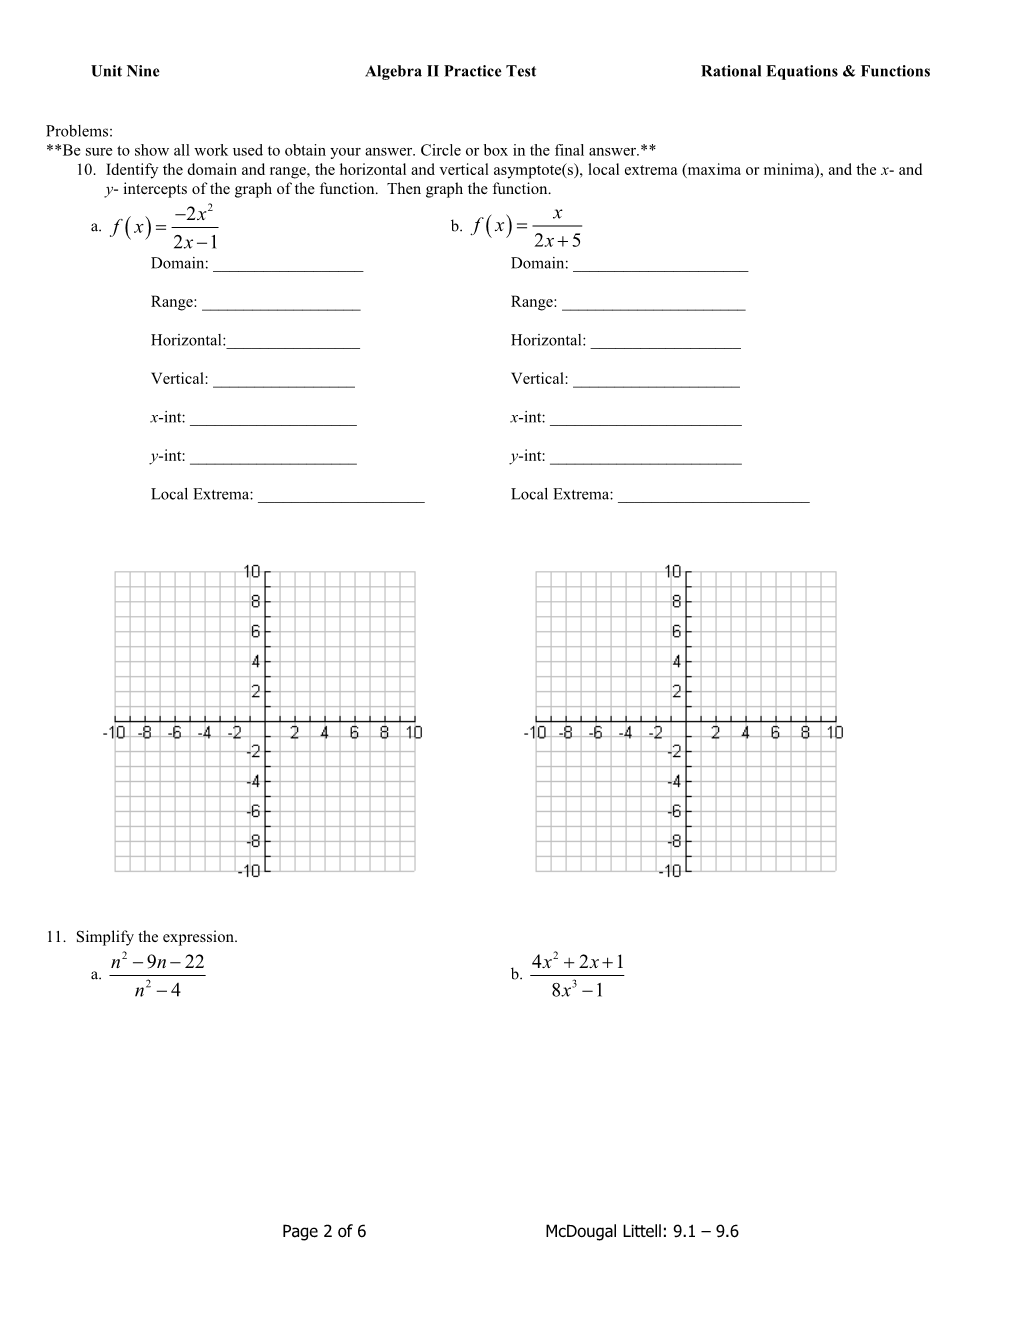 Unit Ninealgebra II Practice Testrational Equations & Functions